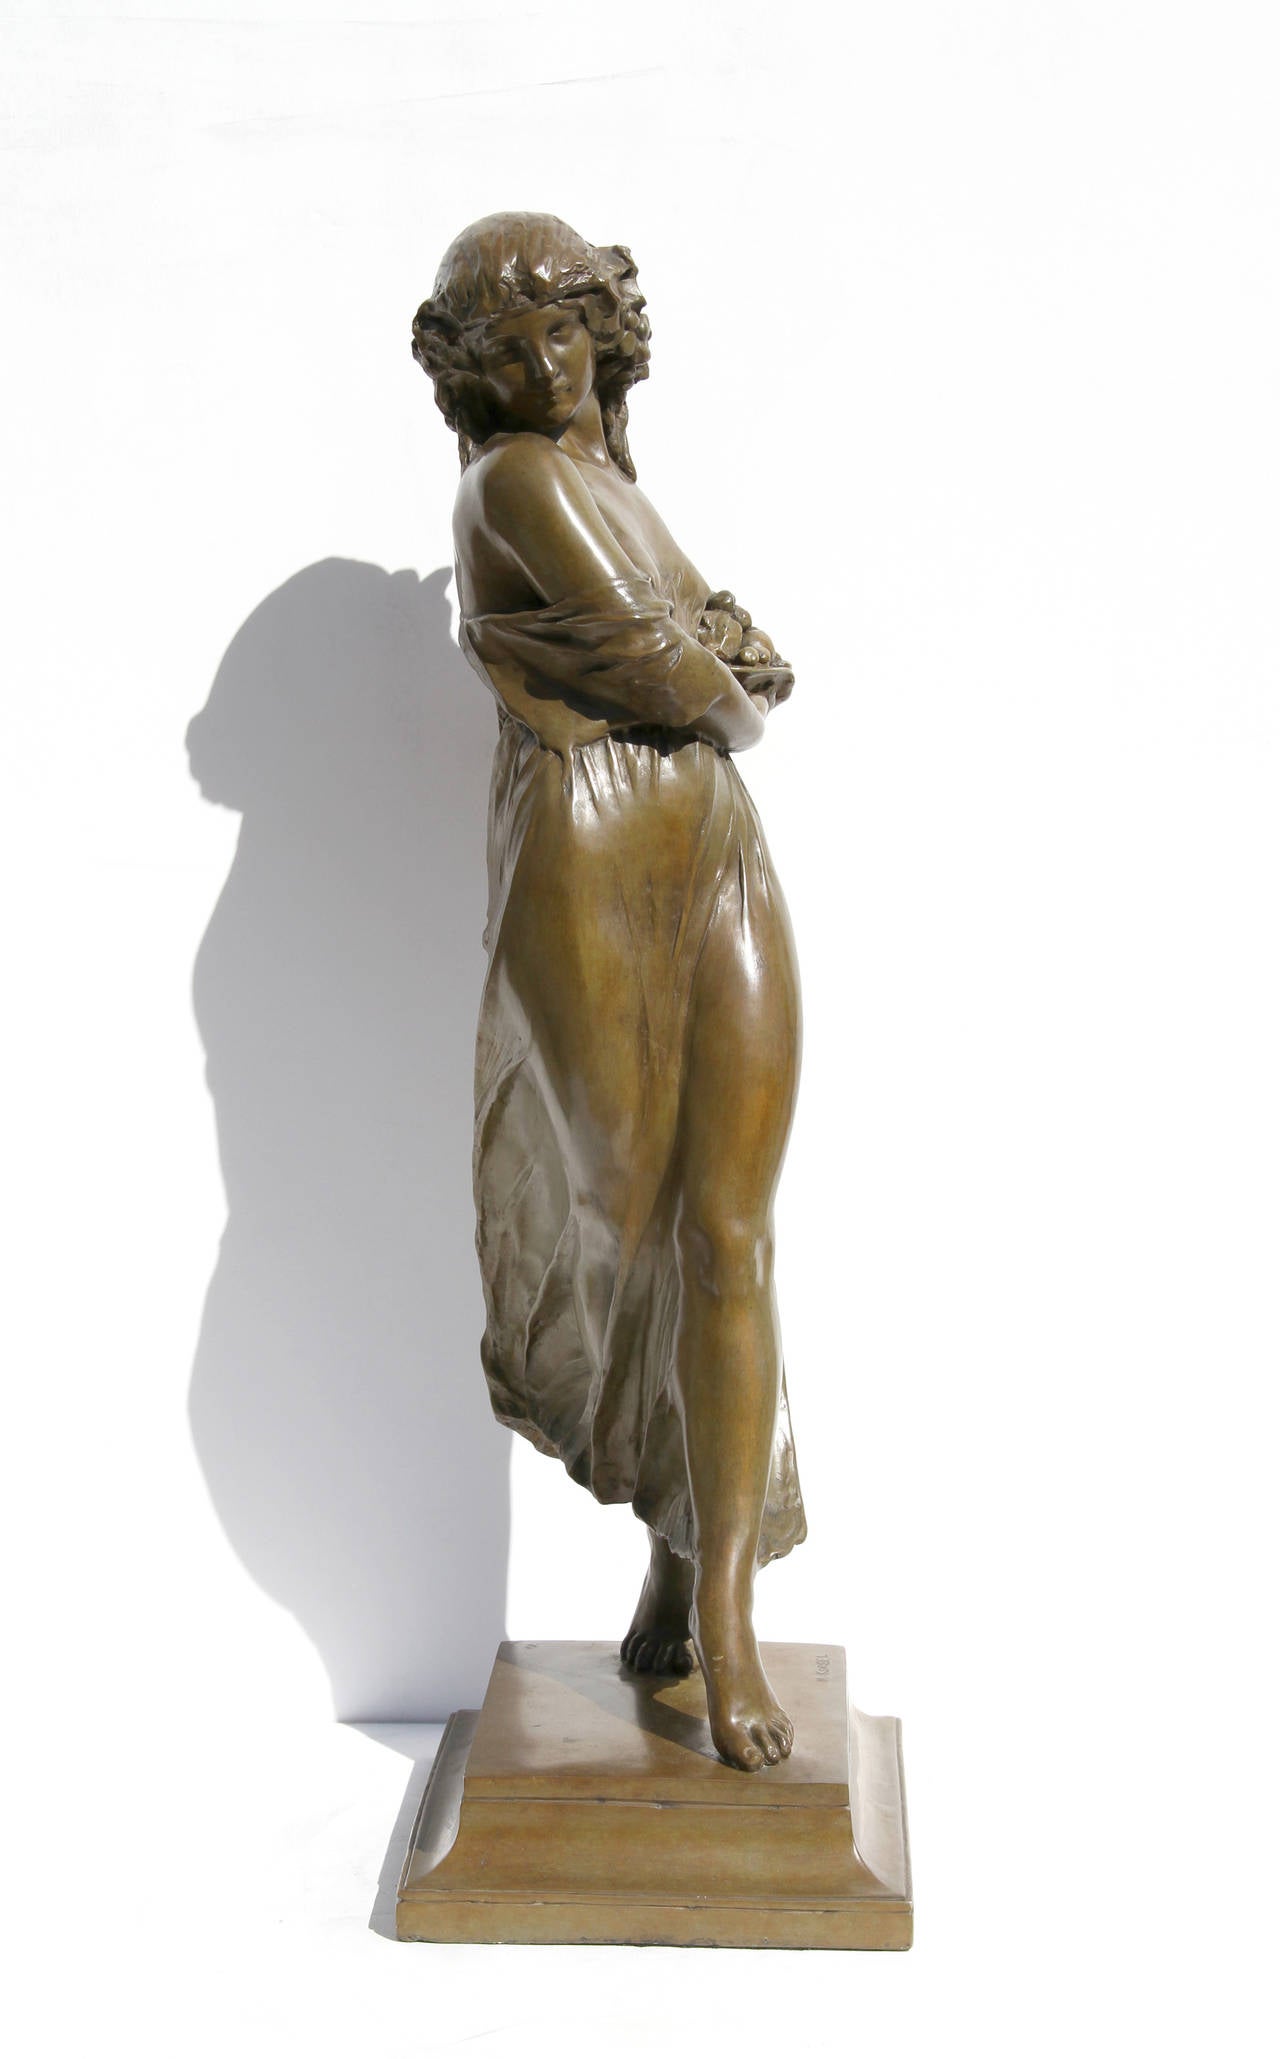 Femme transportant des raisins, bronze Art Nouveau de Mario Korbel - Sculpture de Mario Joseph Korbel